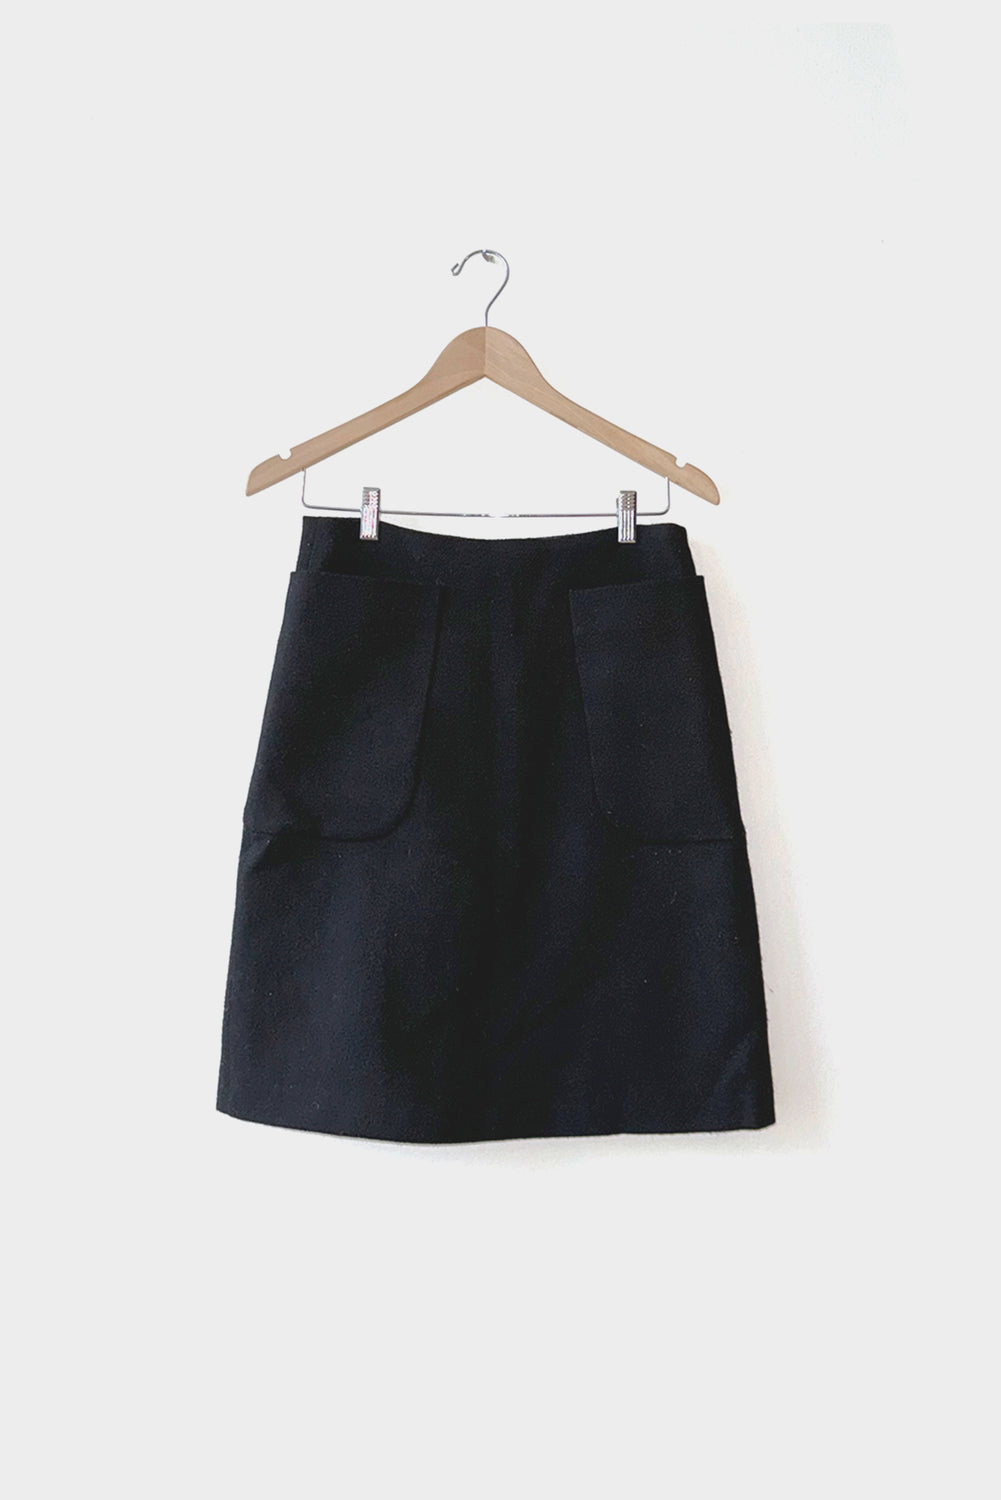 Nygardsanna Black Wool Skirt (gently worn)